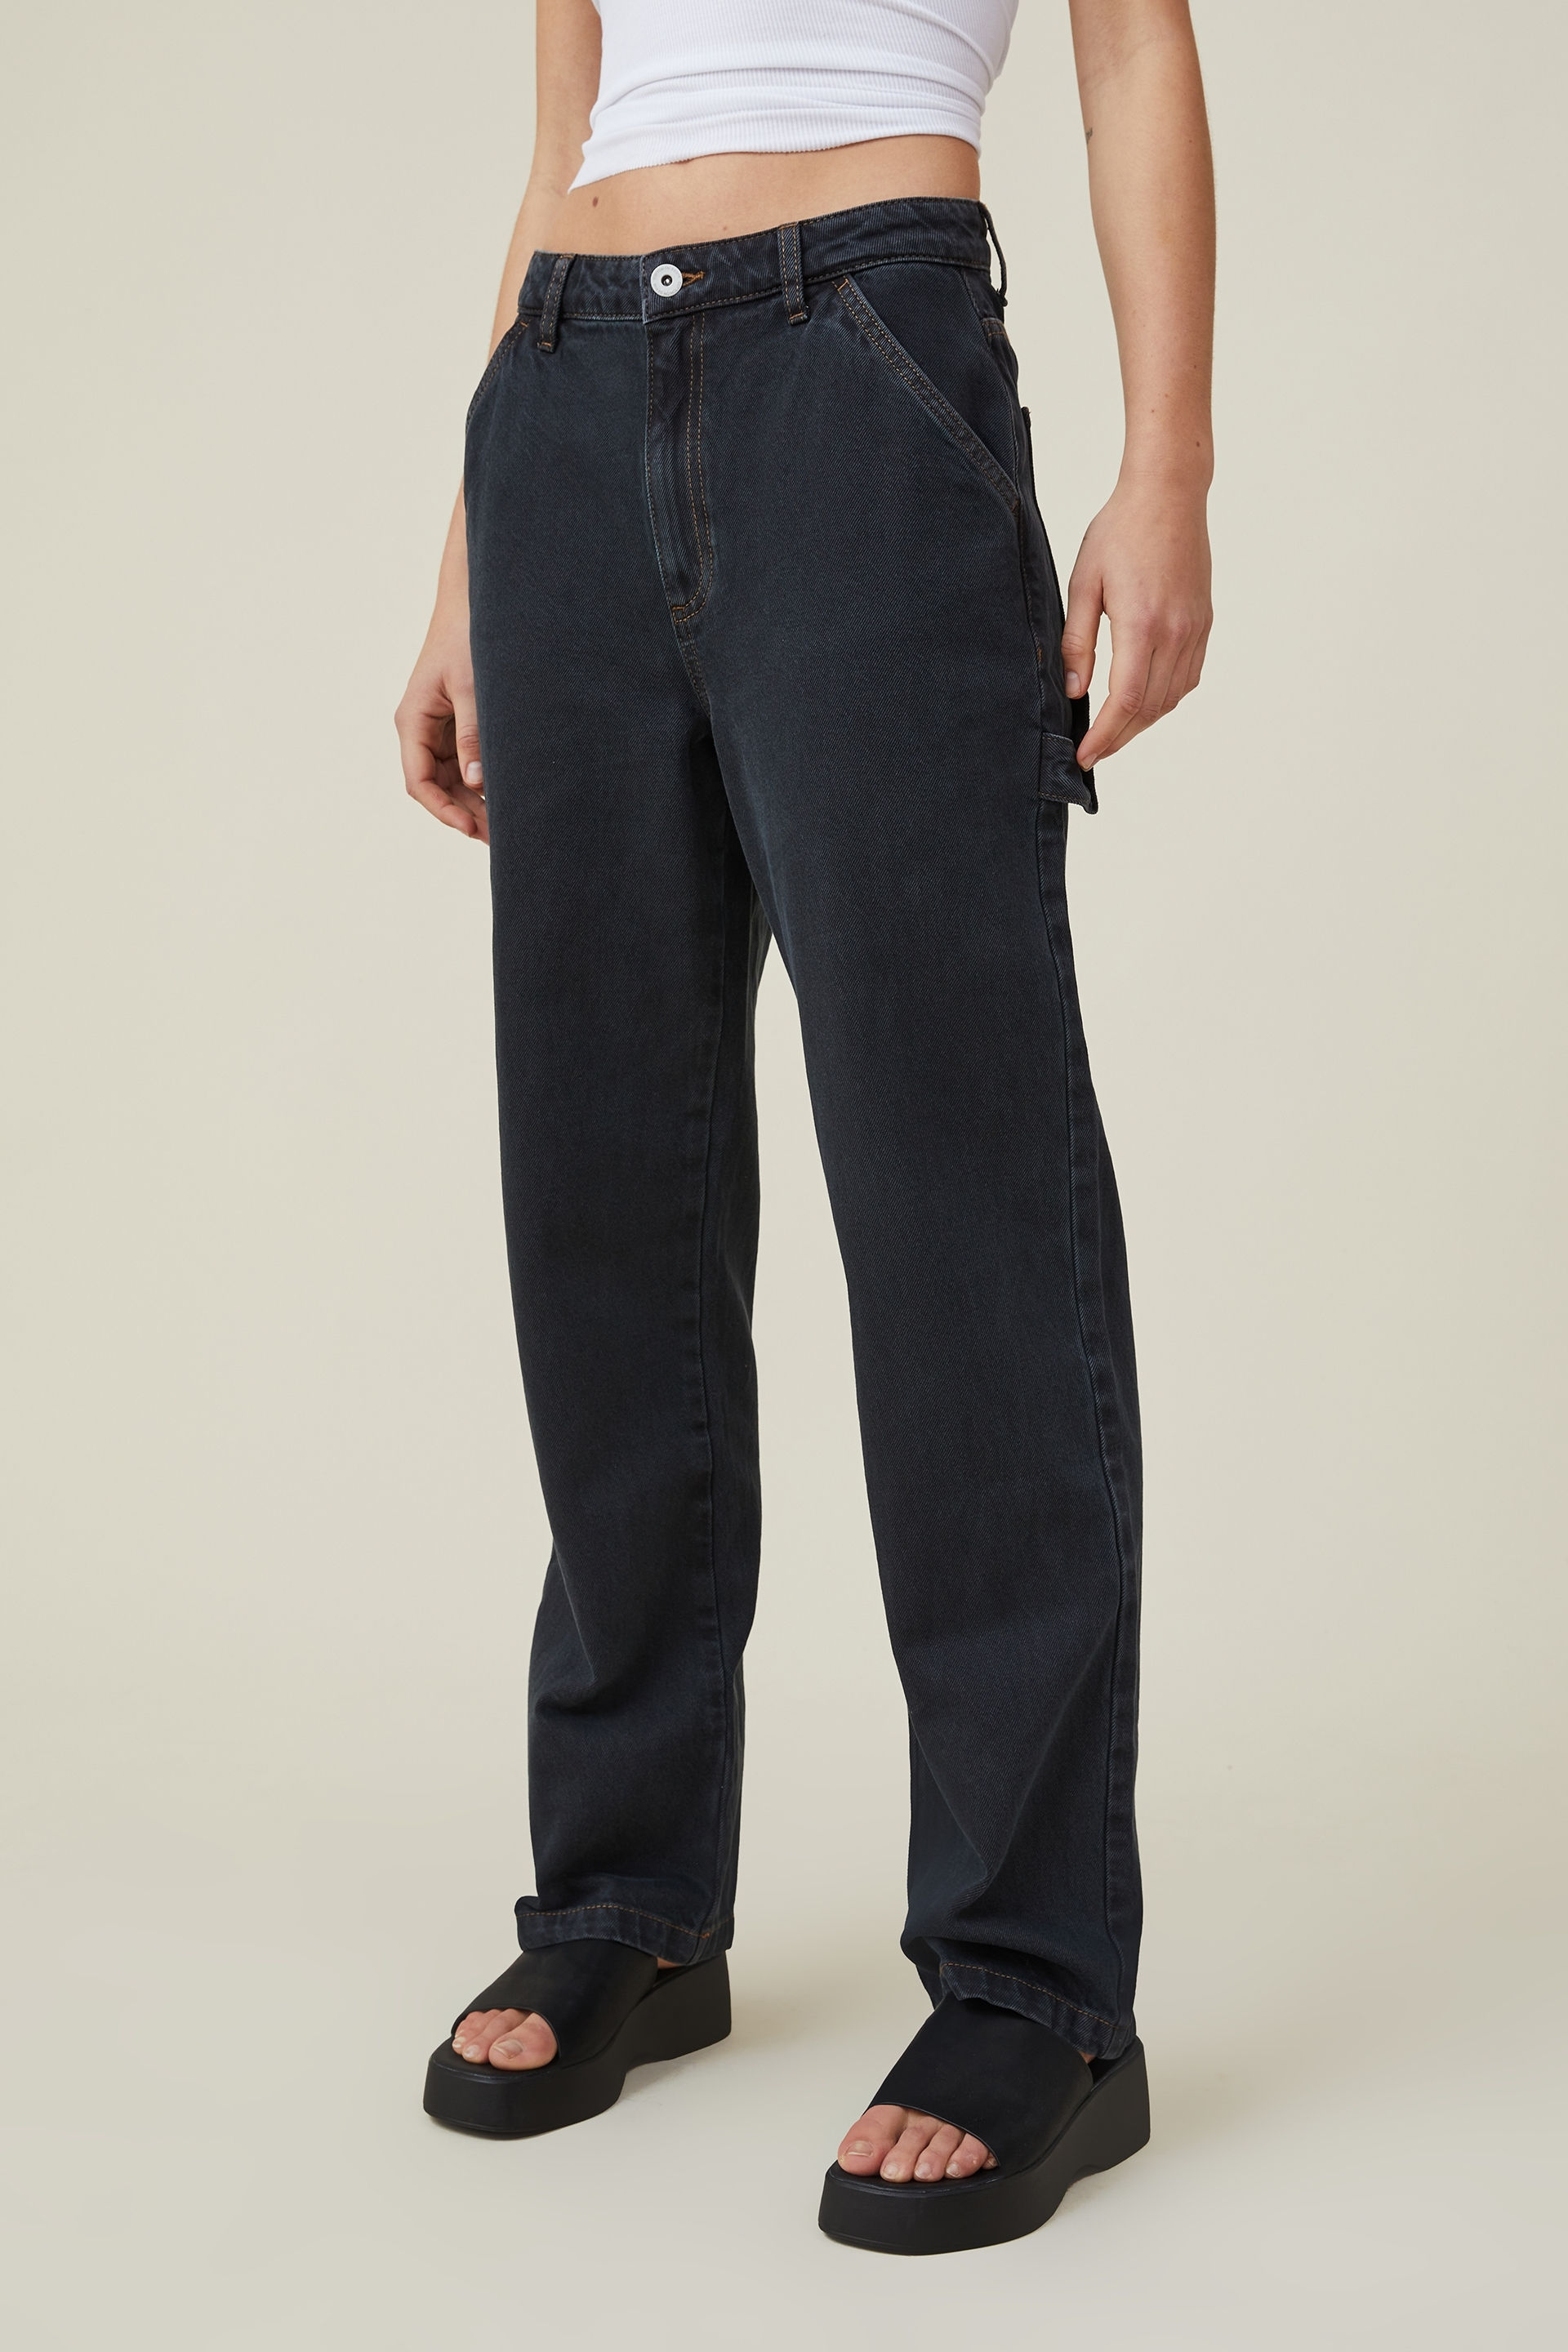 Carpenter Jeans Black Cotton Twill